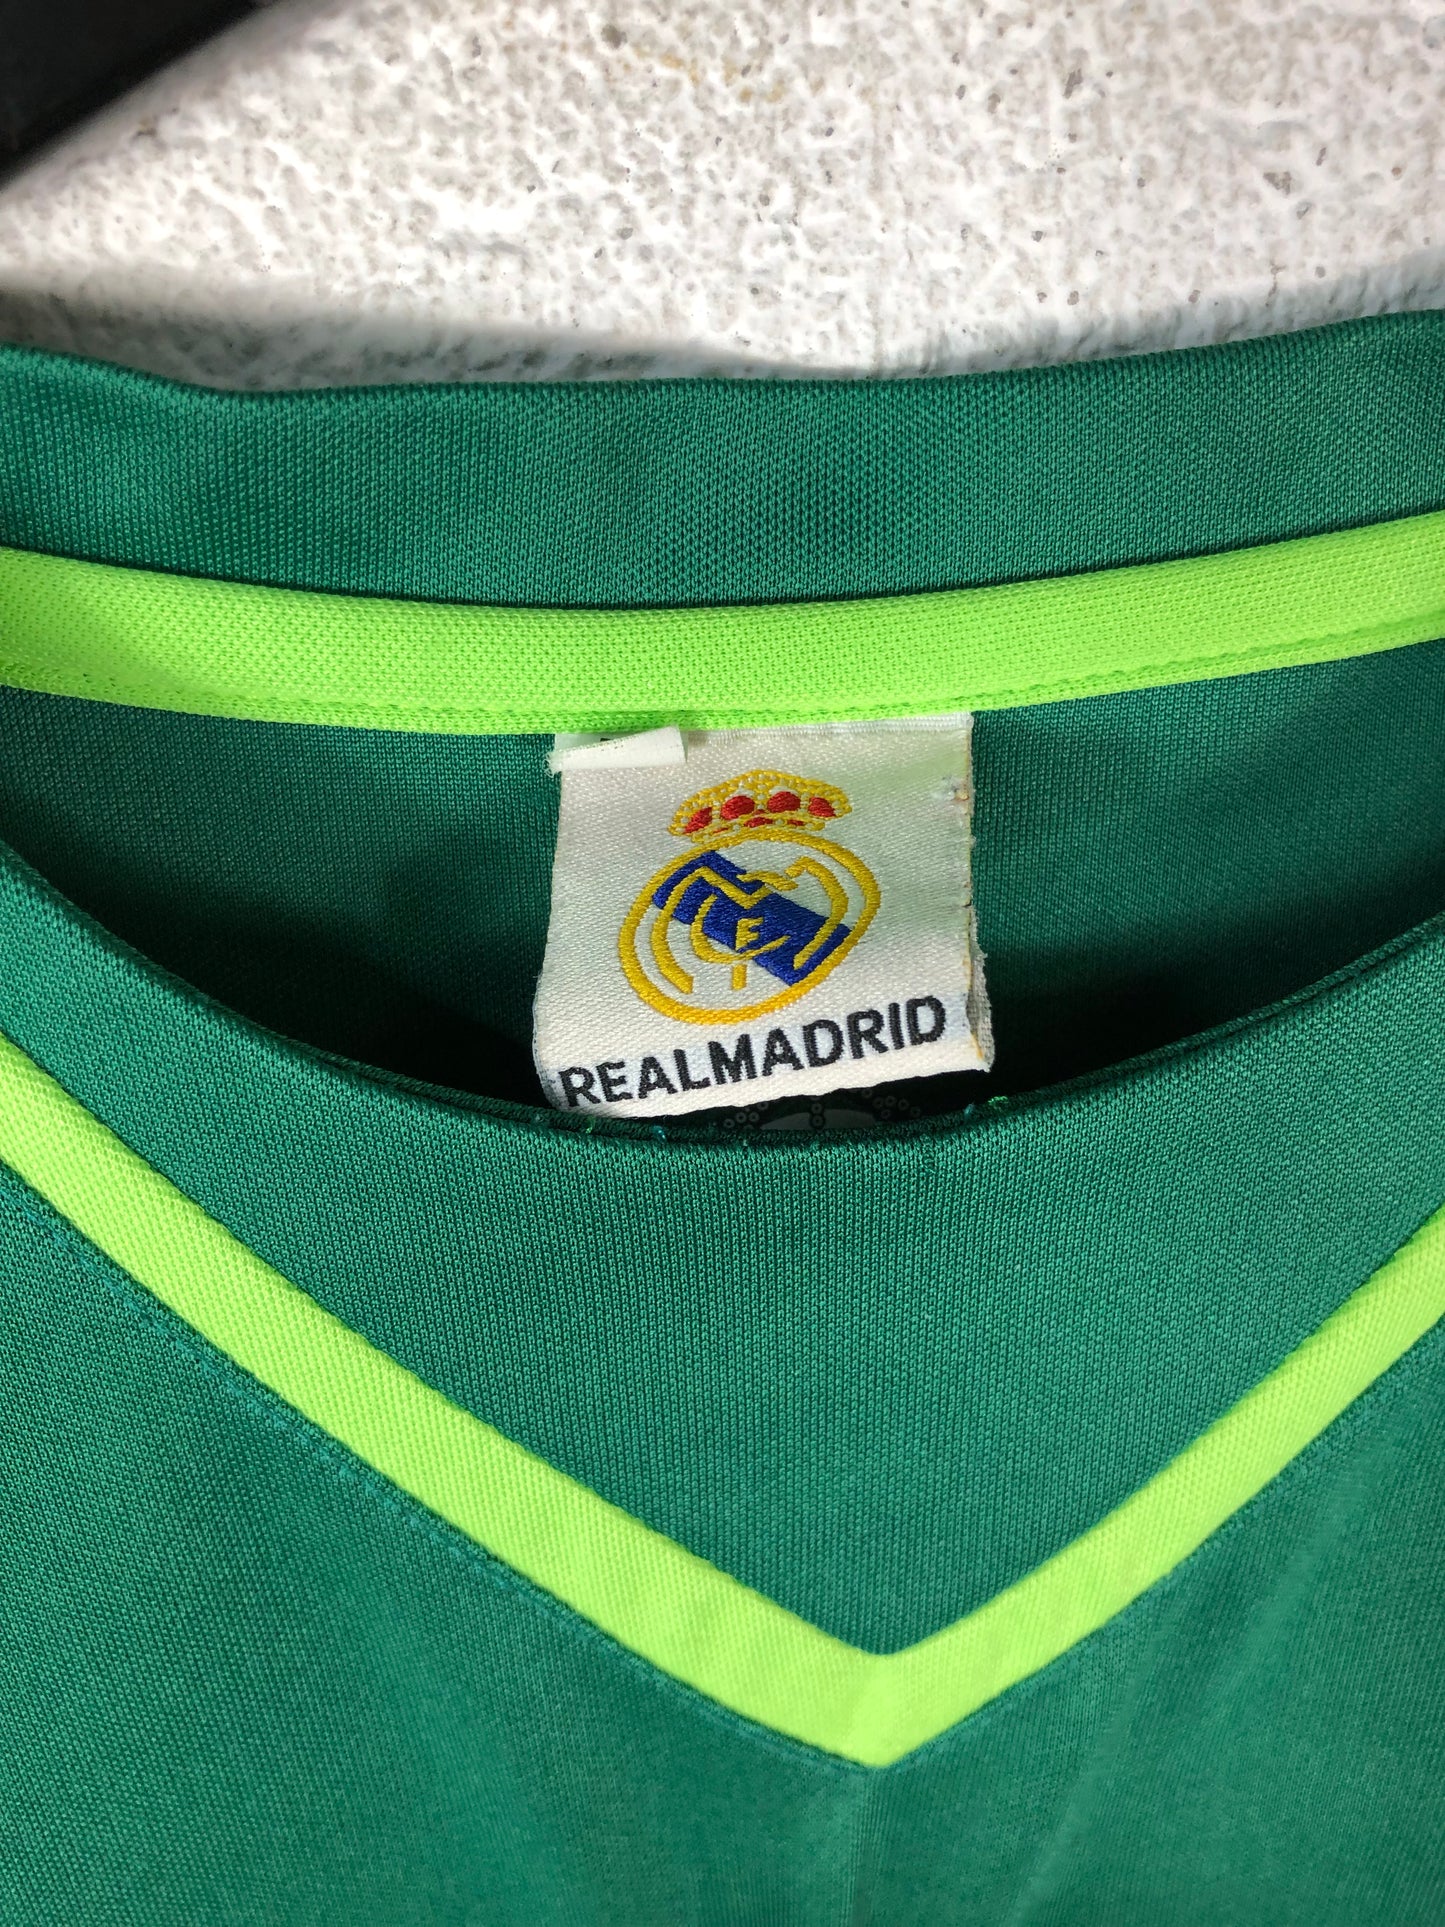 Cristiano Ronaldo Real Madrid Green Replica Soccer Jersey Sz M